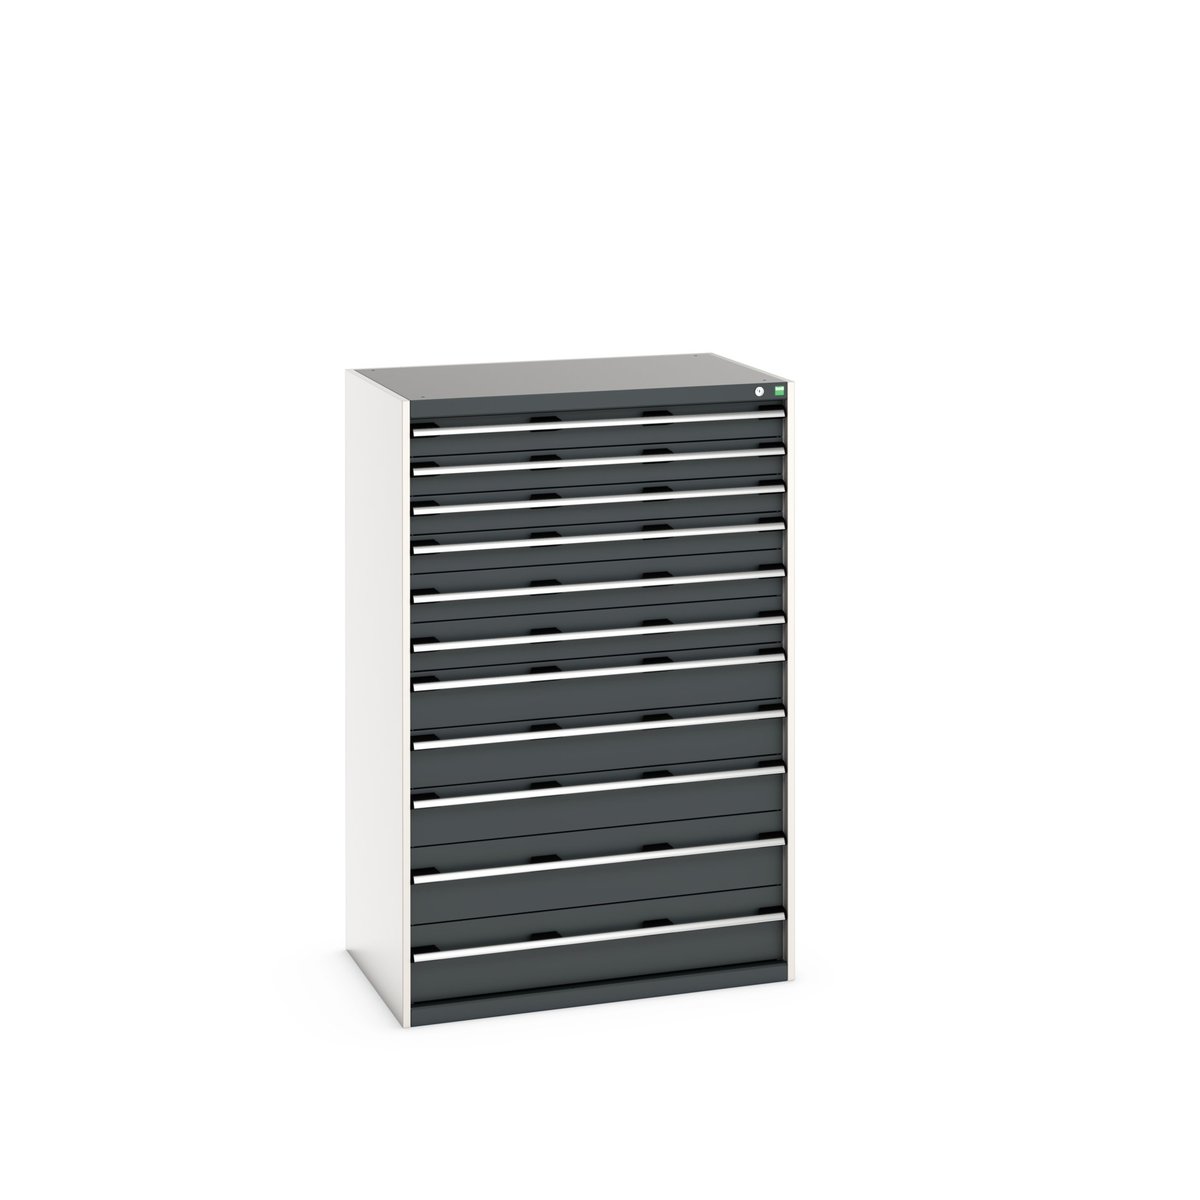 40029038. - cubio drawer cabinet